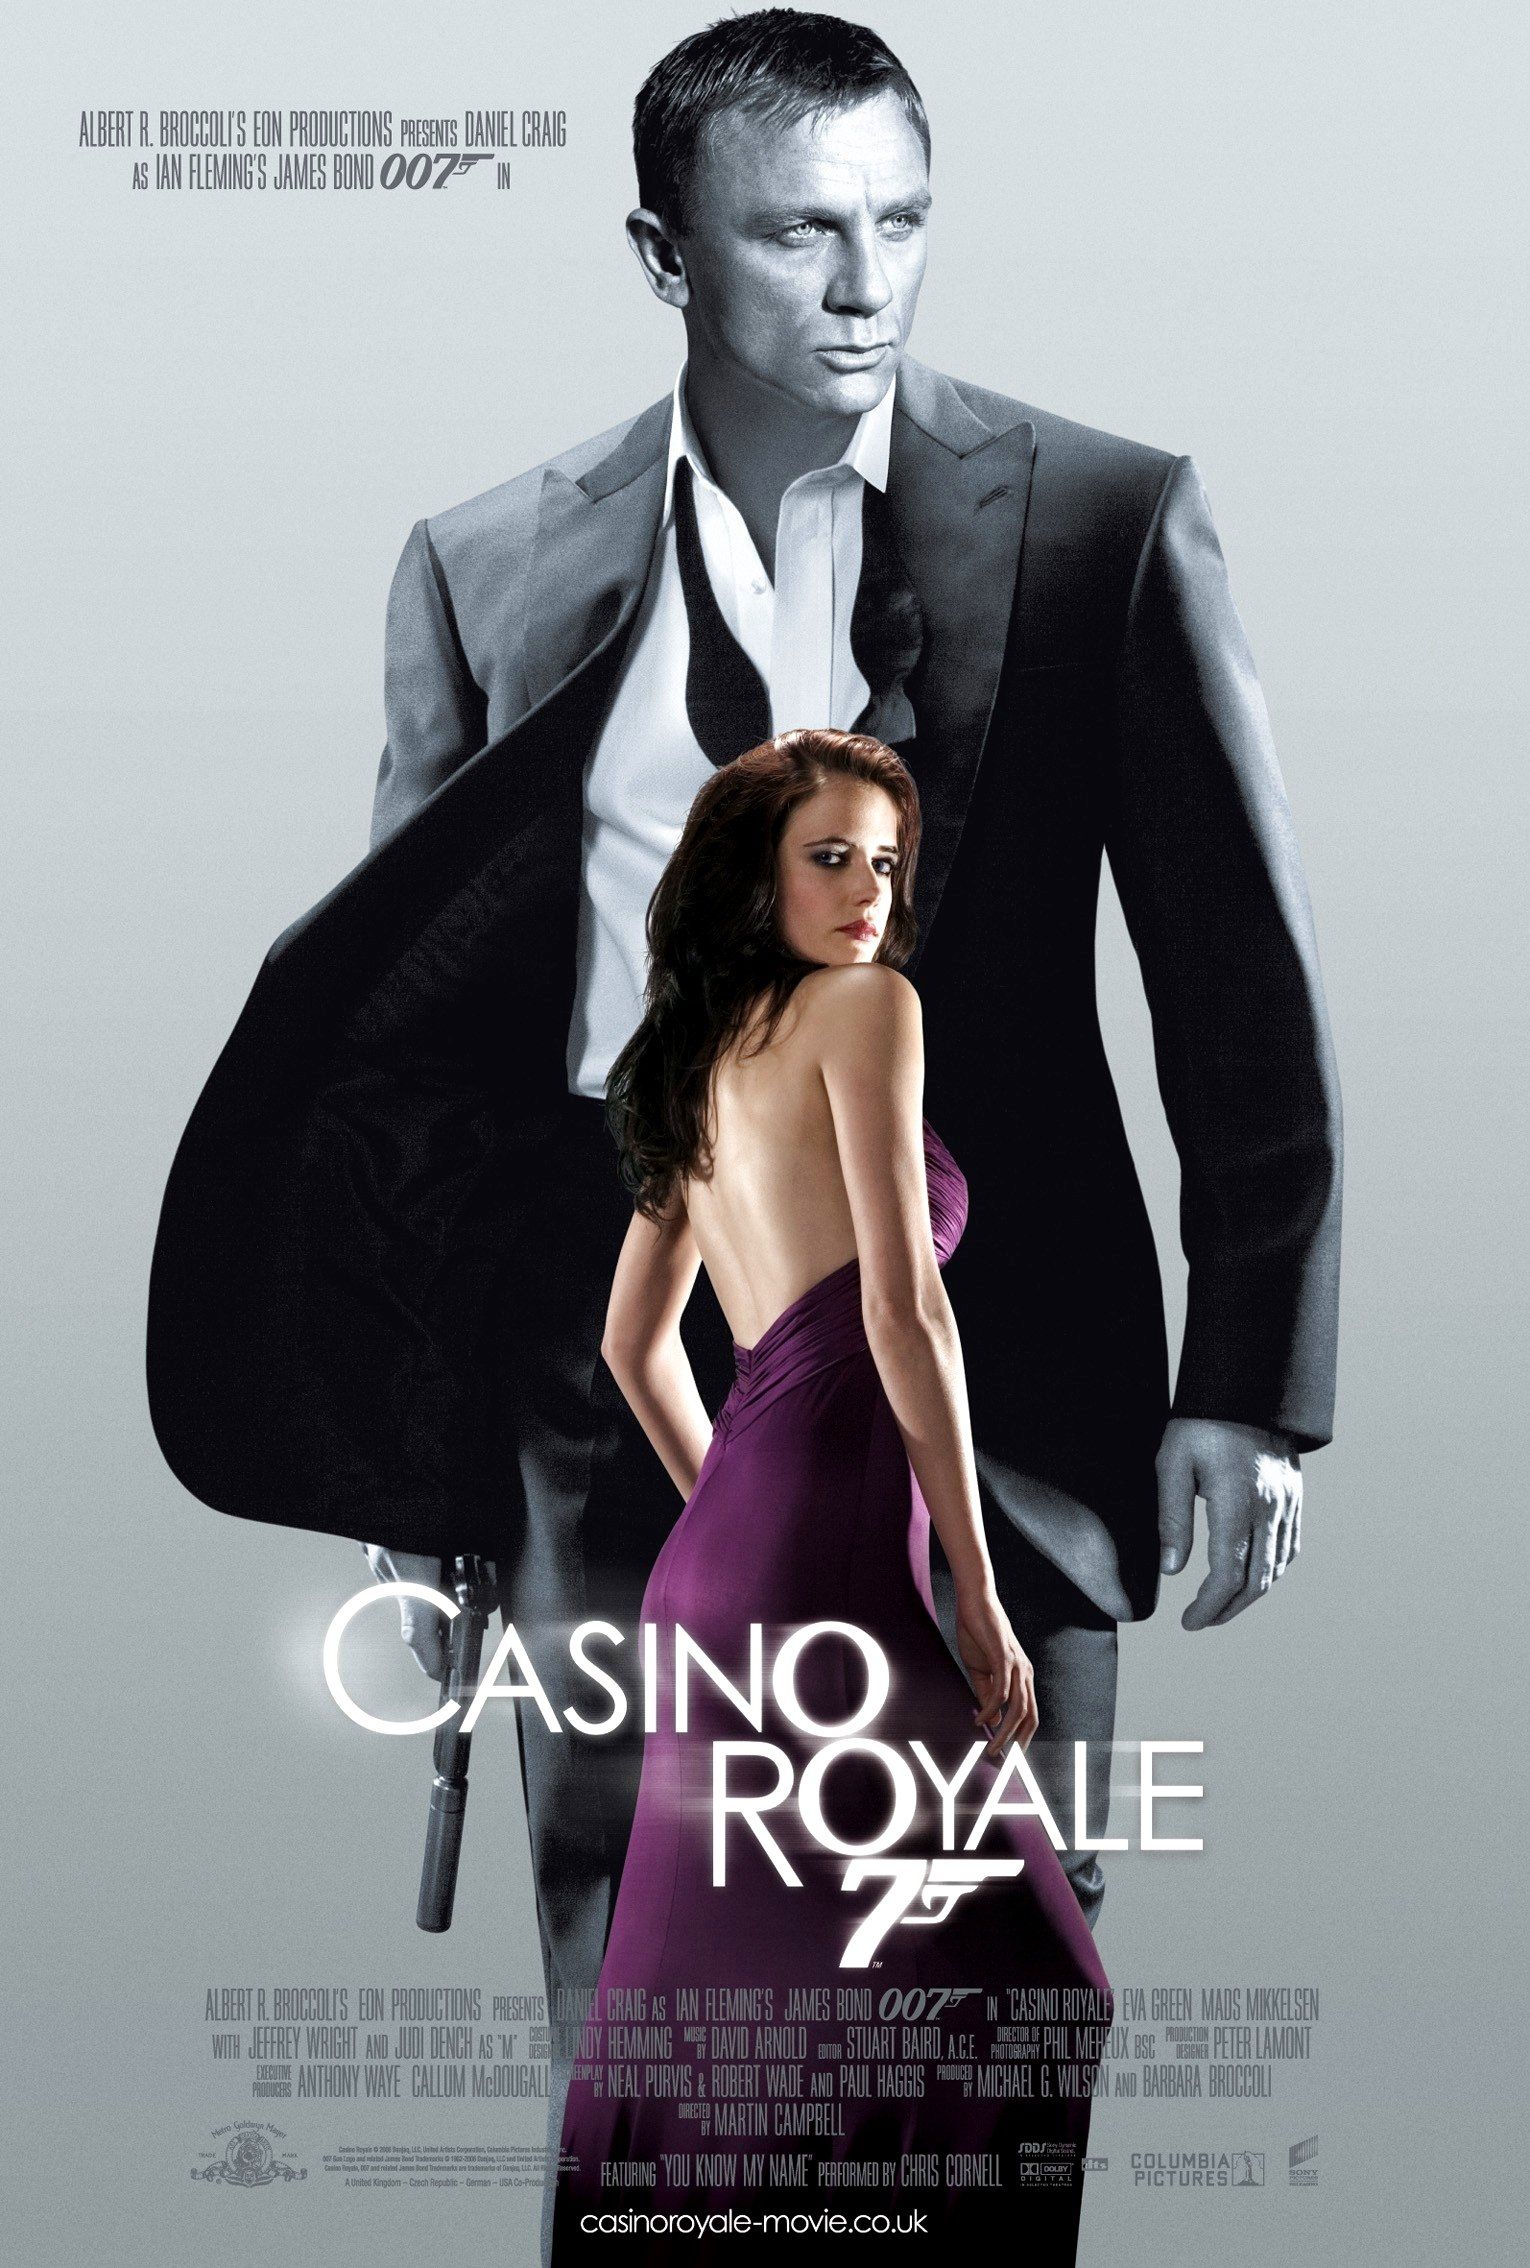 casino royale cast 007